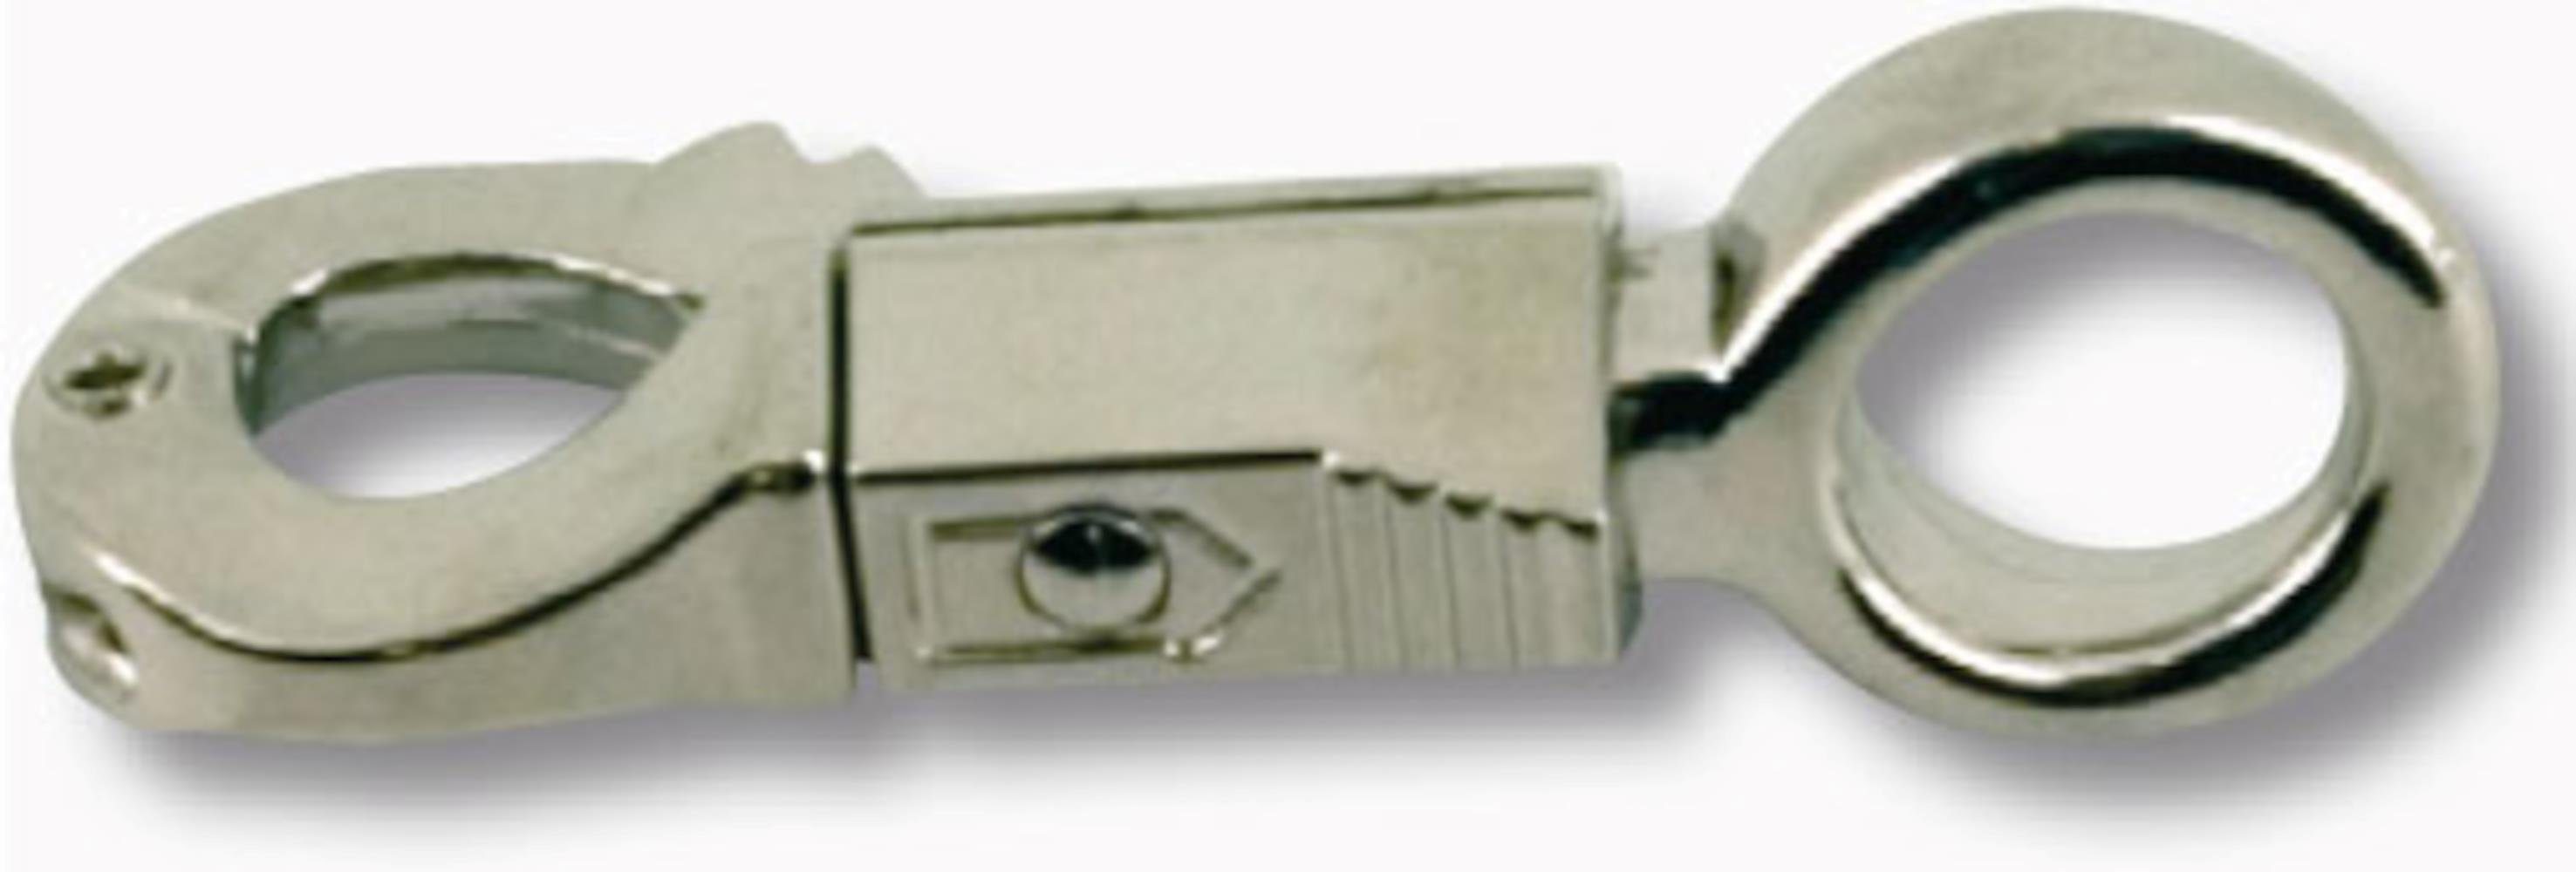 eldorado Verschlussklammer Panikhaken - 9.5 cm